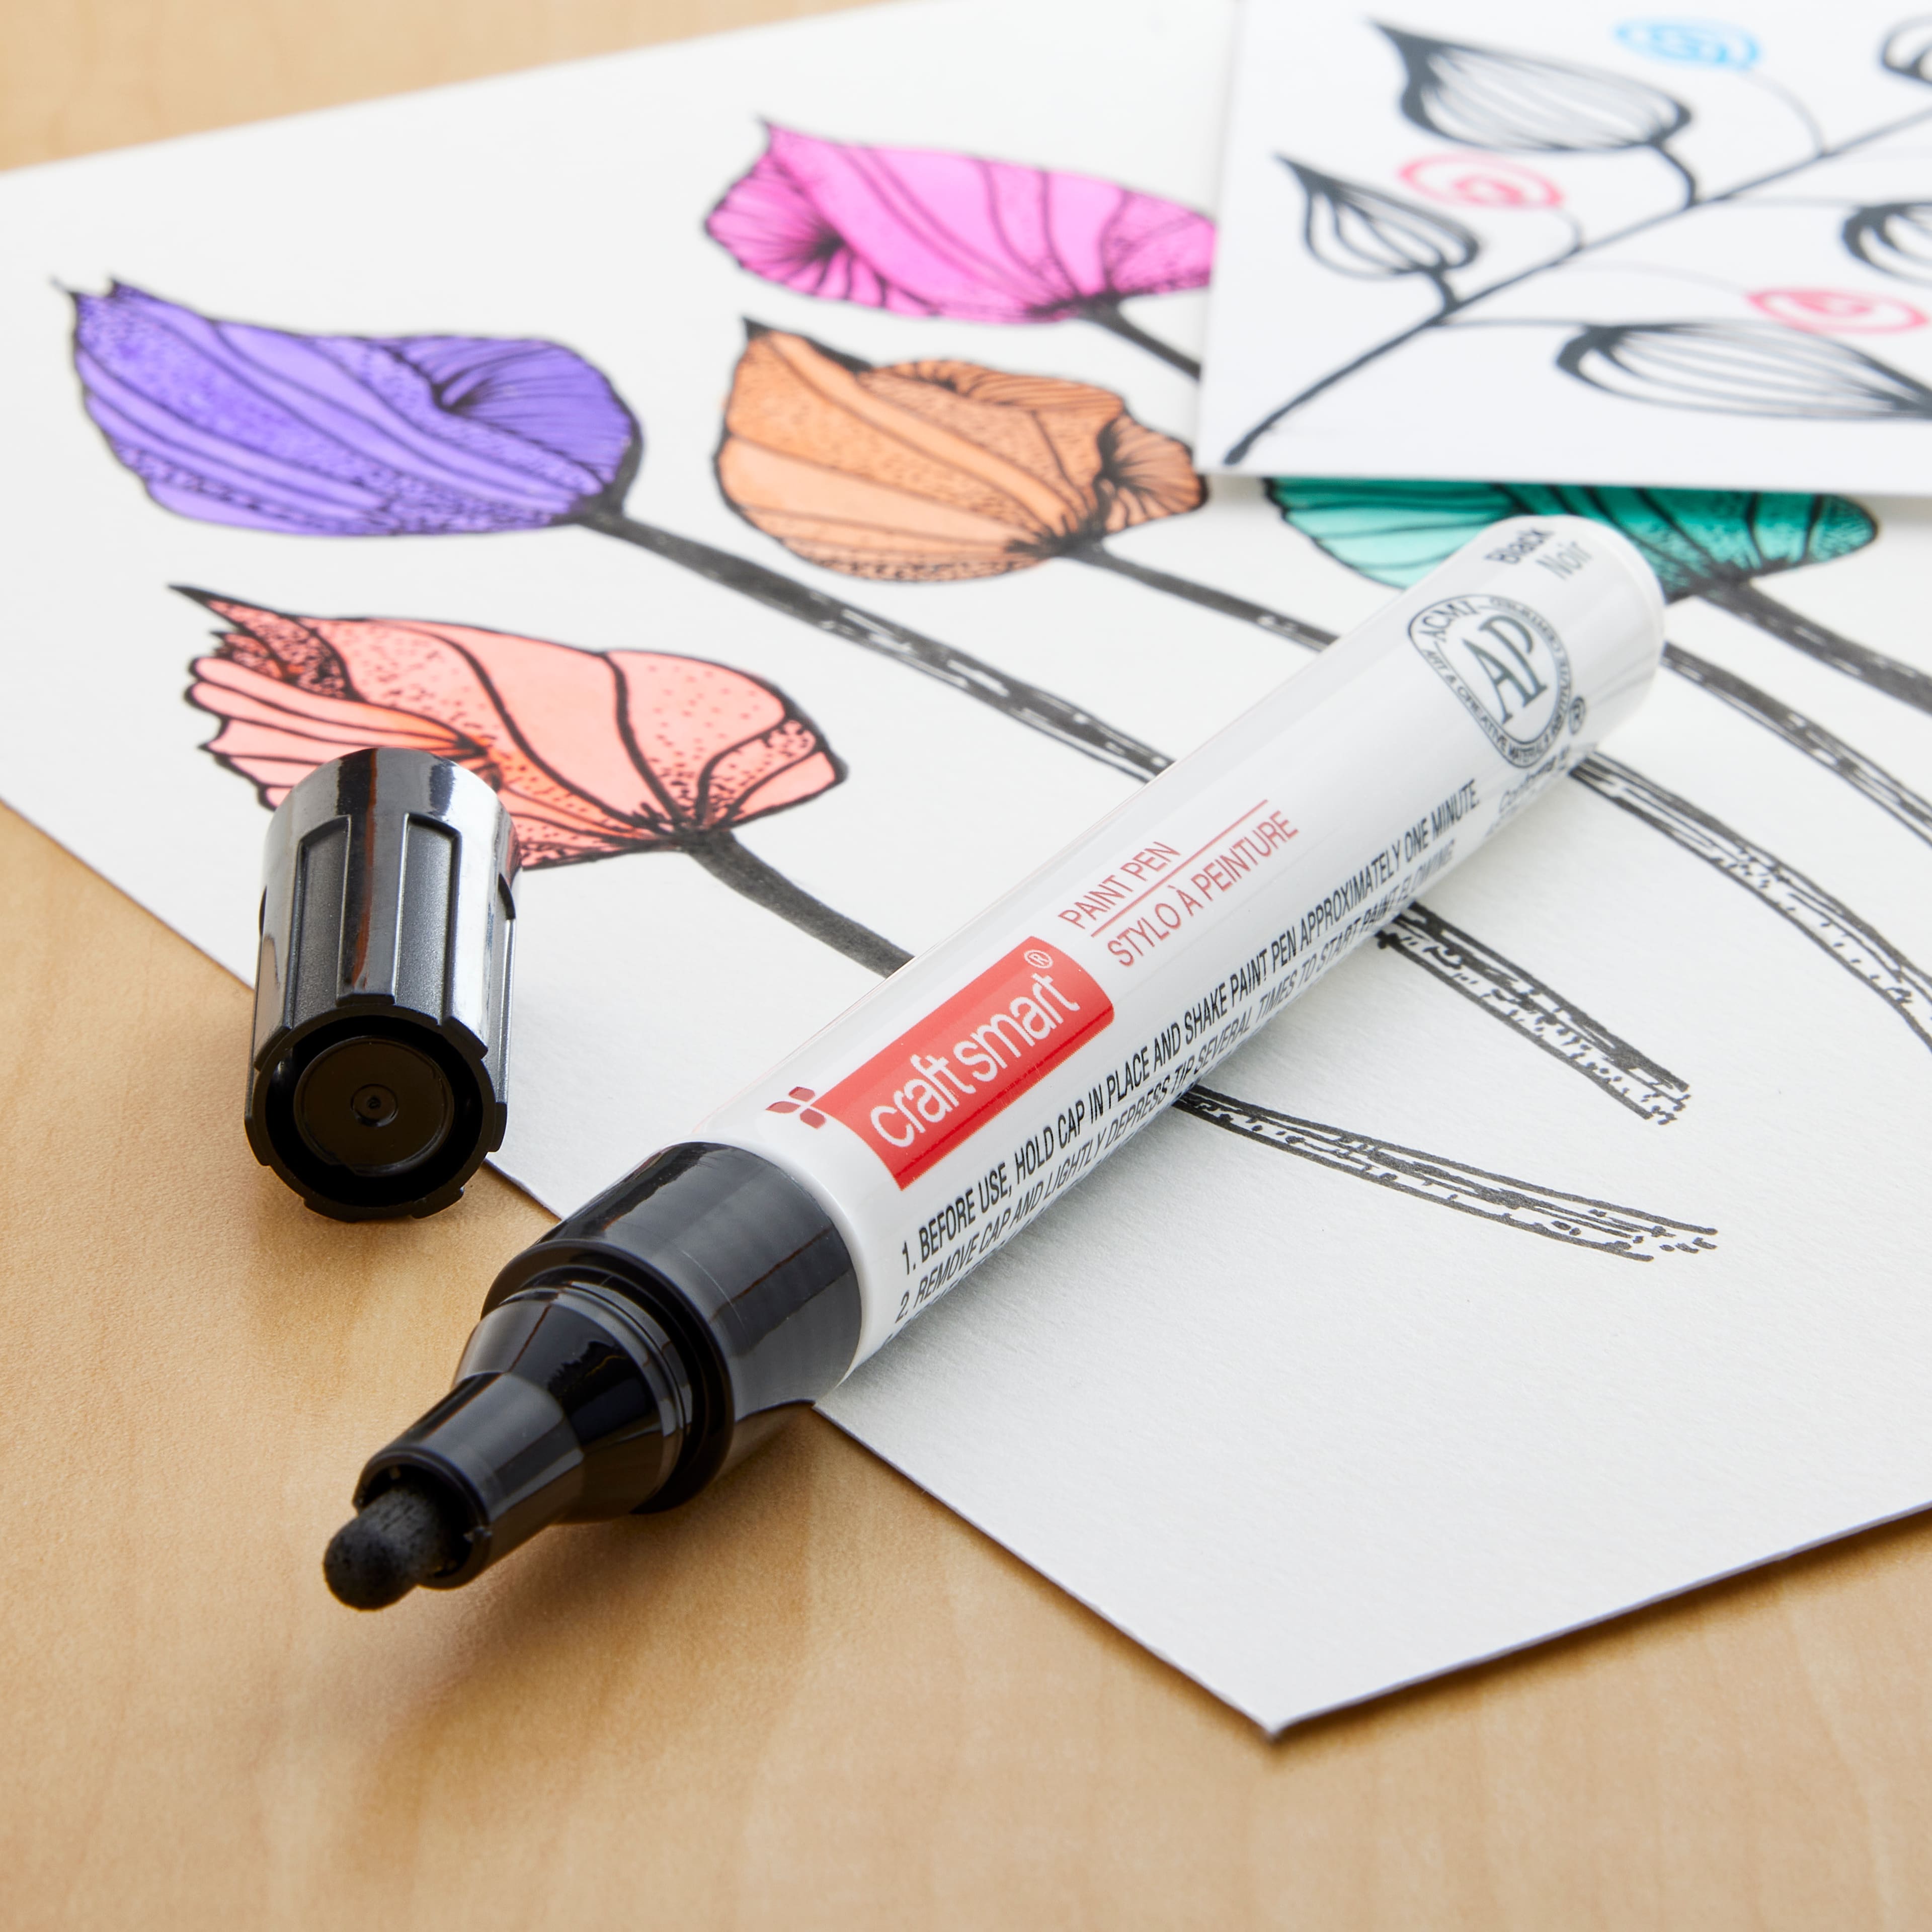 12 Pack: Multi-Surface Fine Tip Premium Paint Pen by Craft Smart®